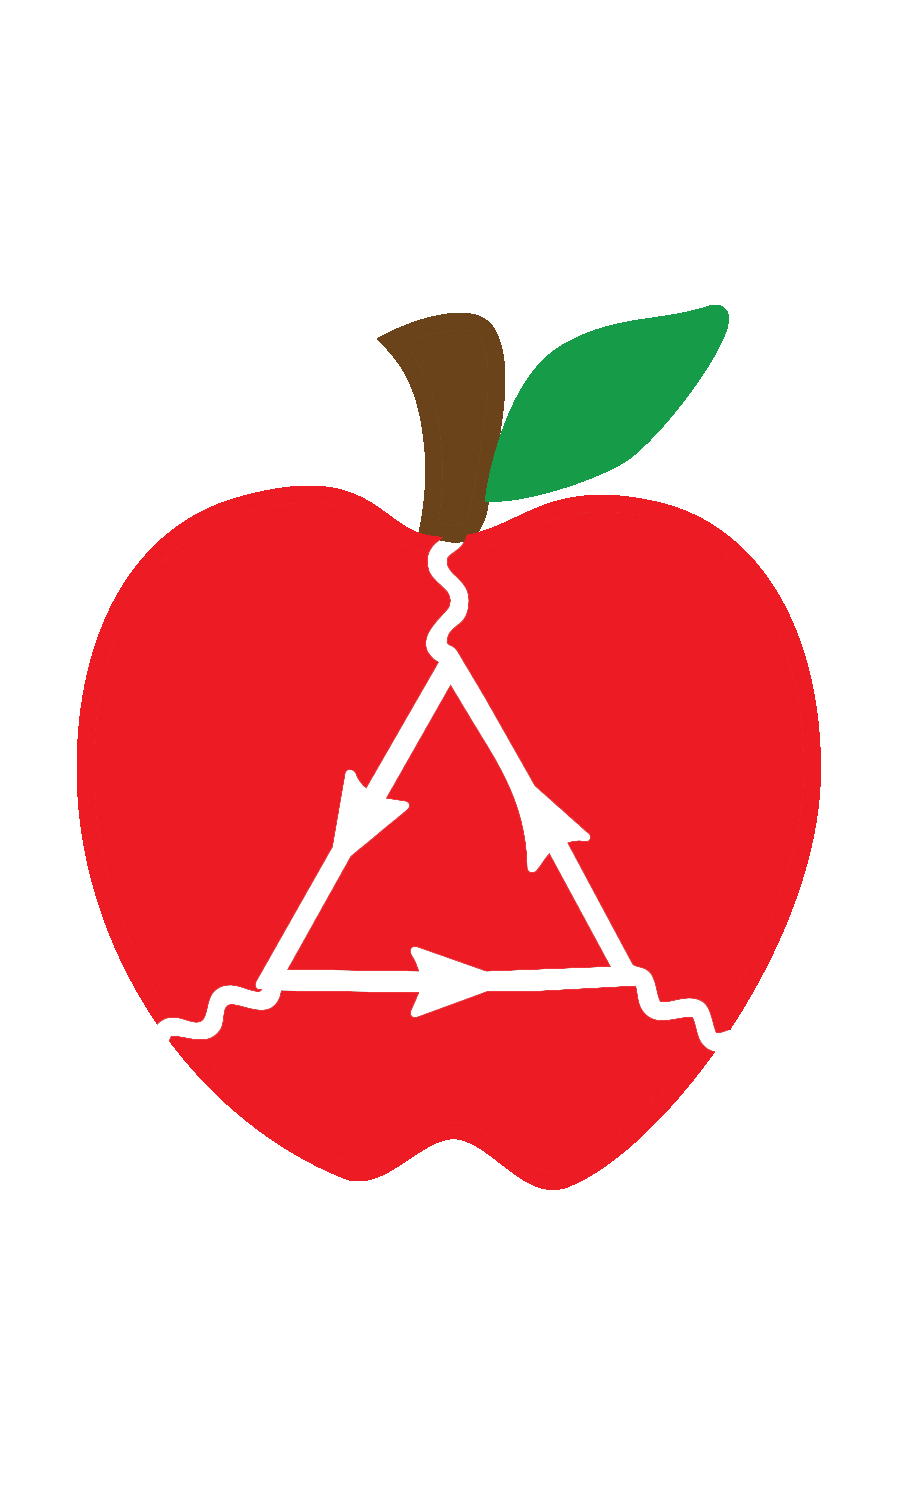 clipart apple teacher